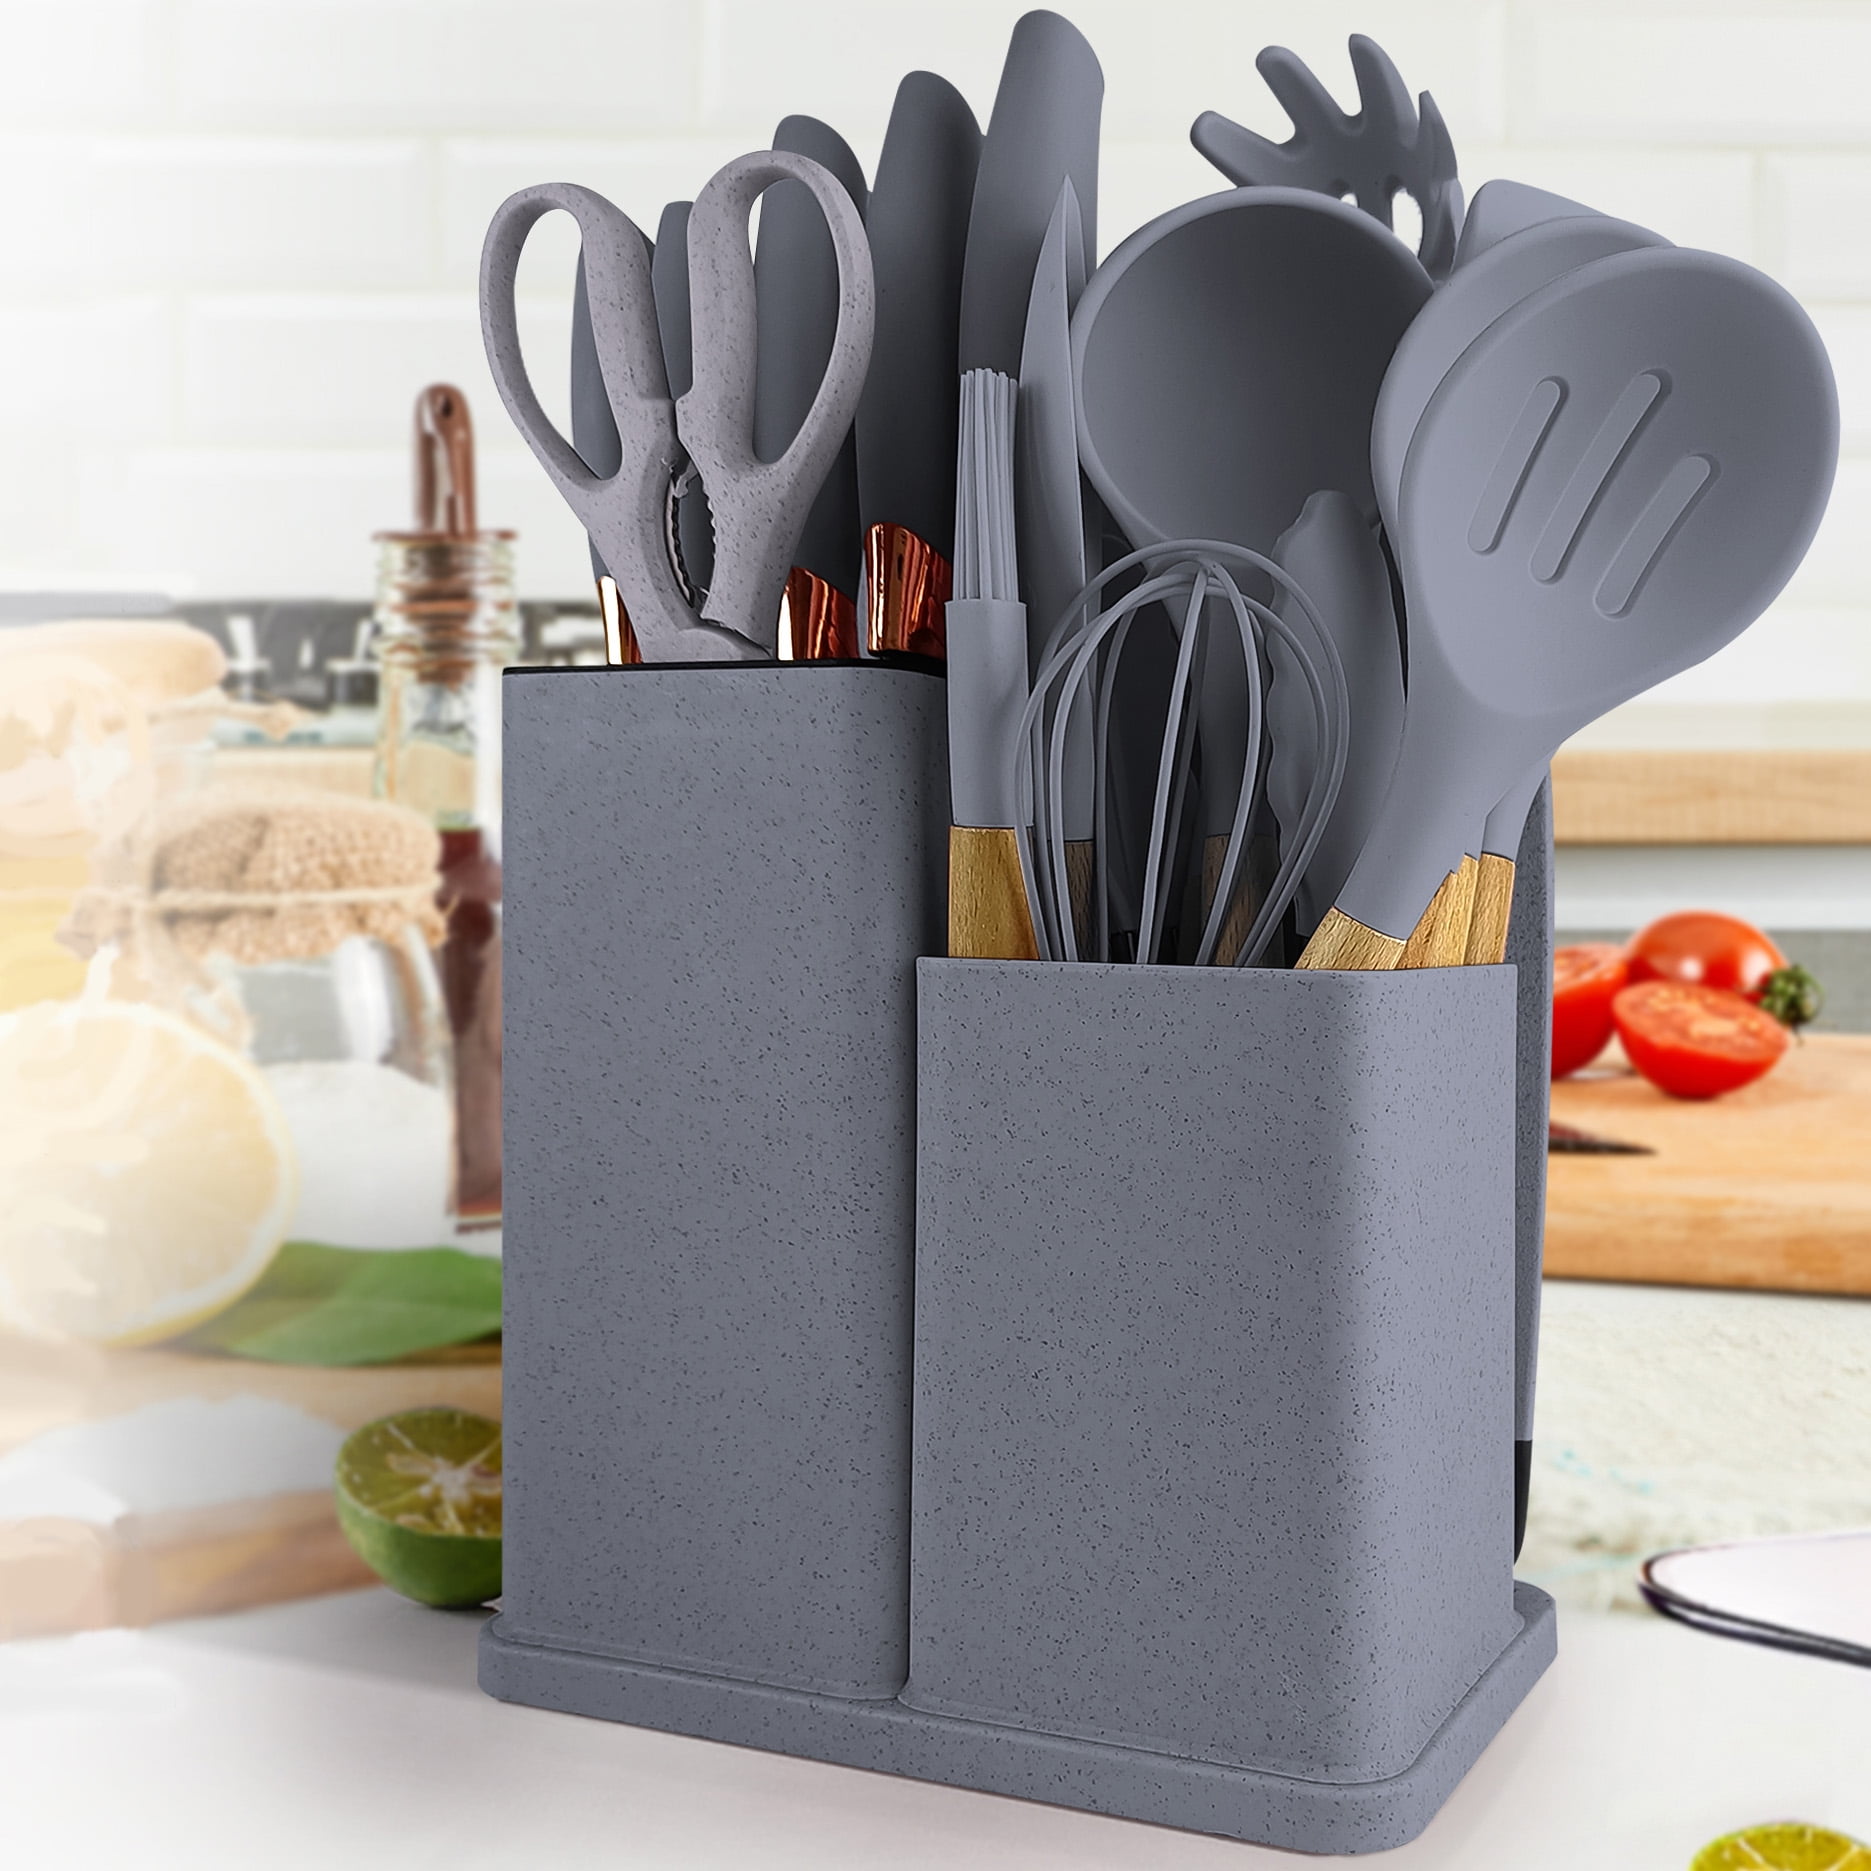 popular silicone 19pcs kitchen utensil set